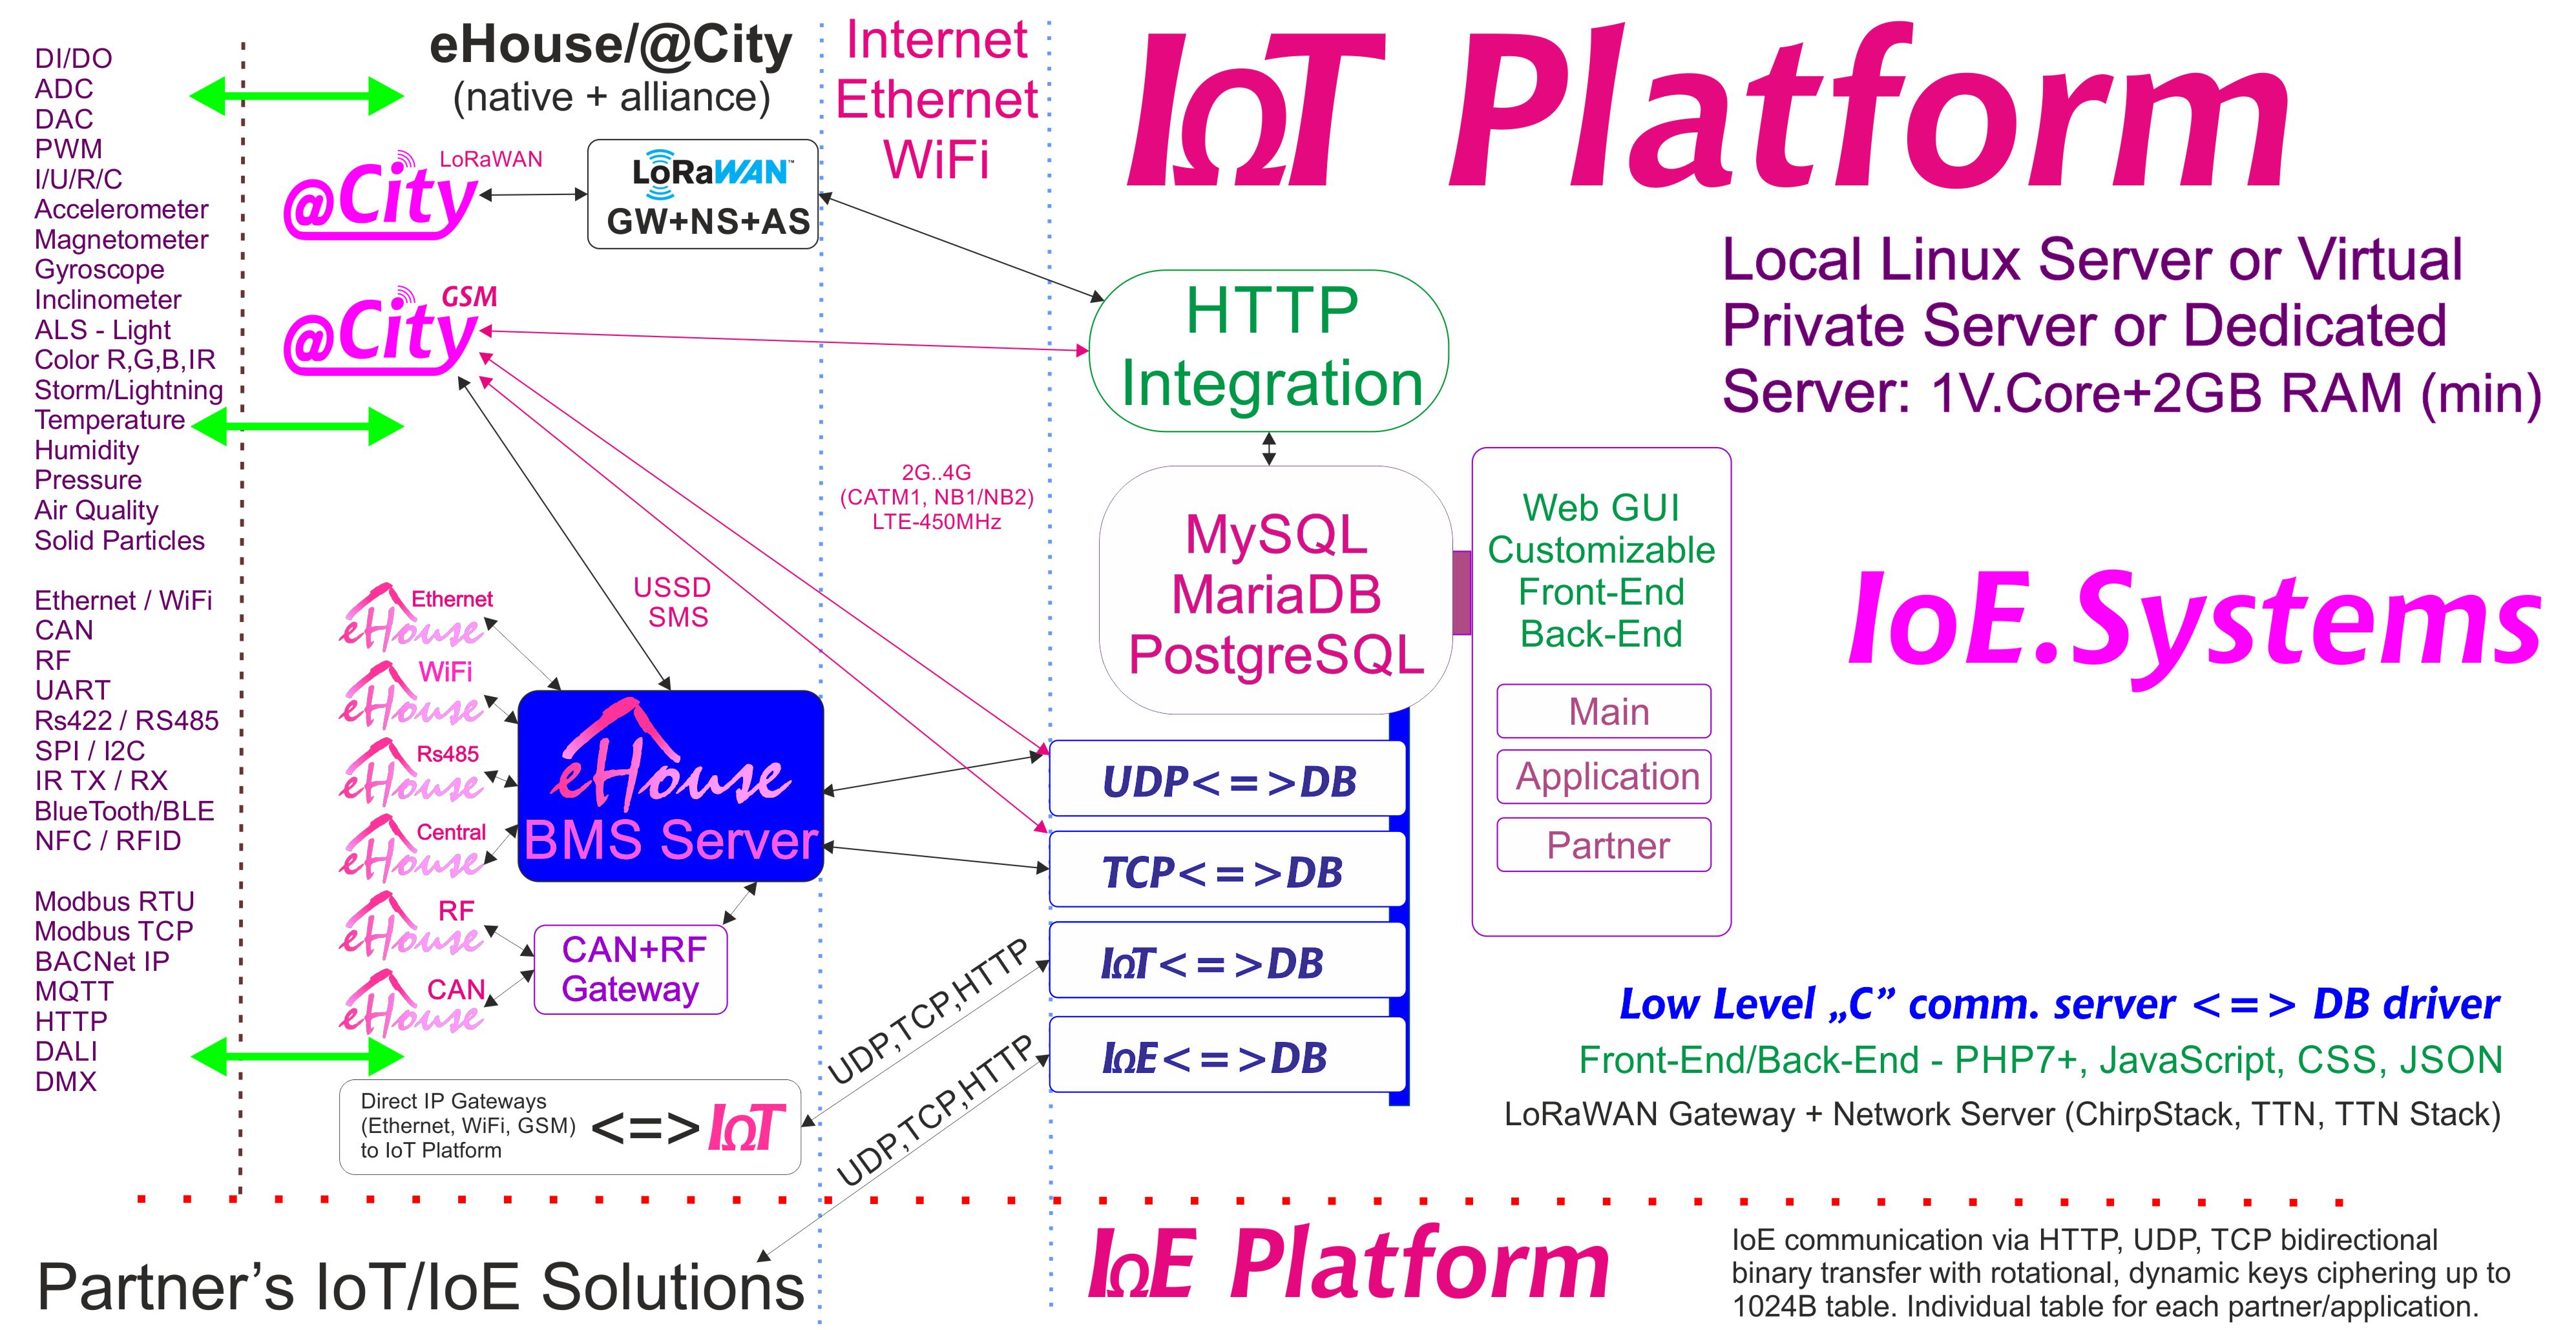 eHouse, eCity Server Software BAS, BMS, IoE, IoT Systems en Platform